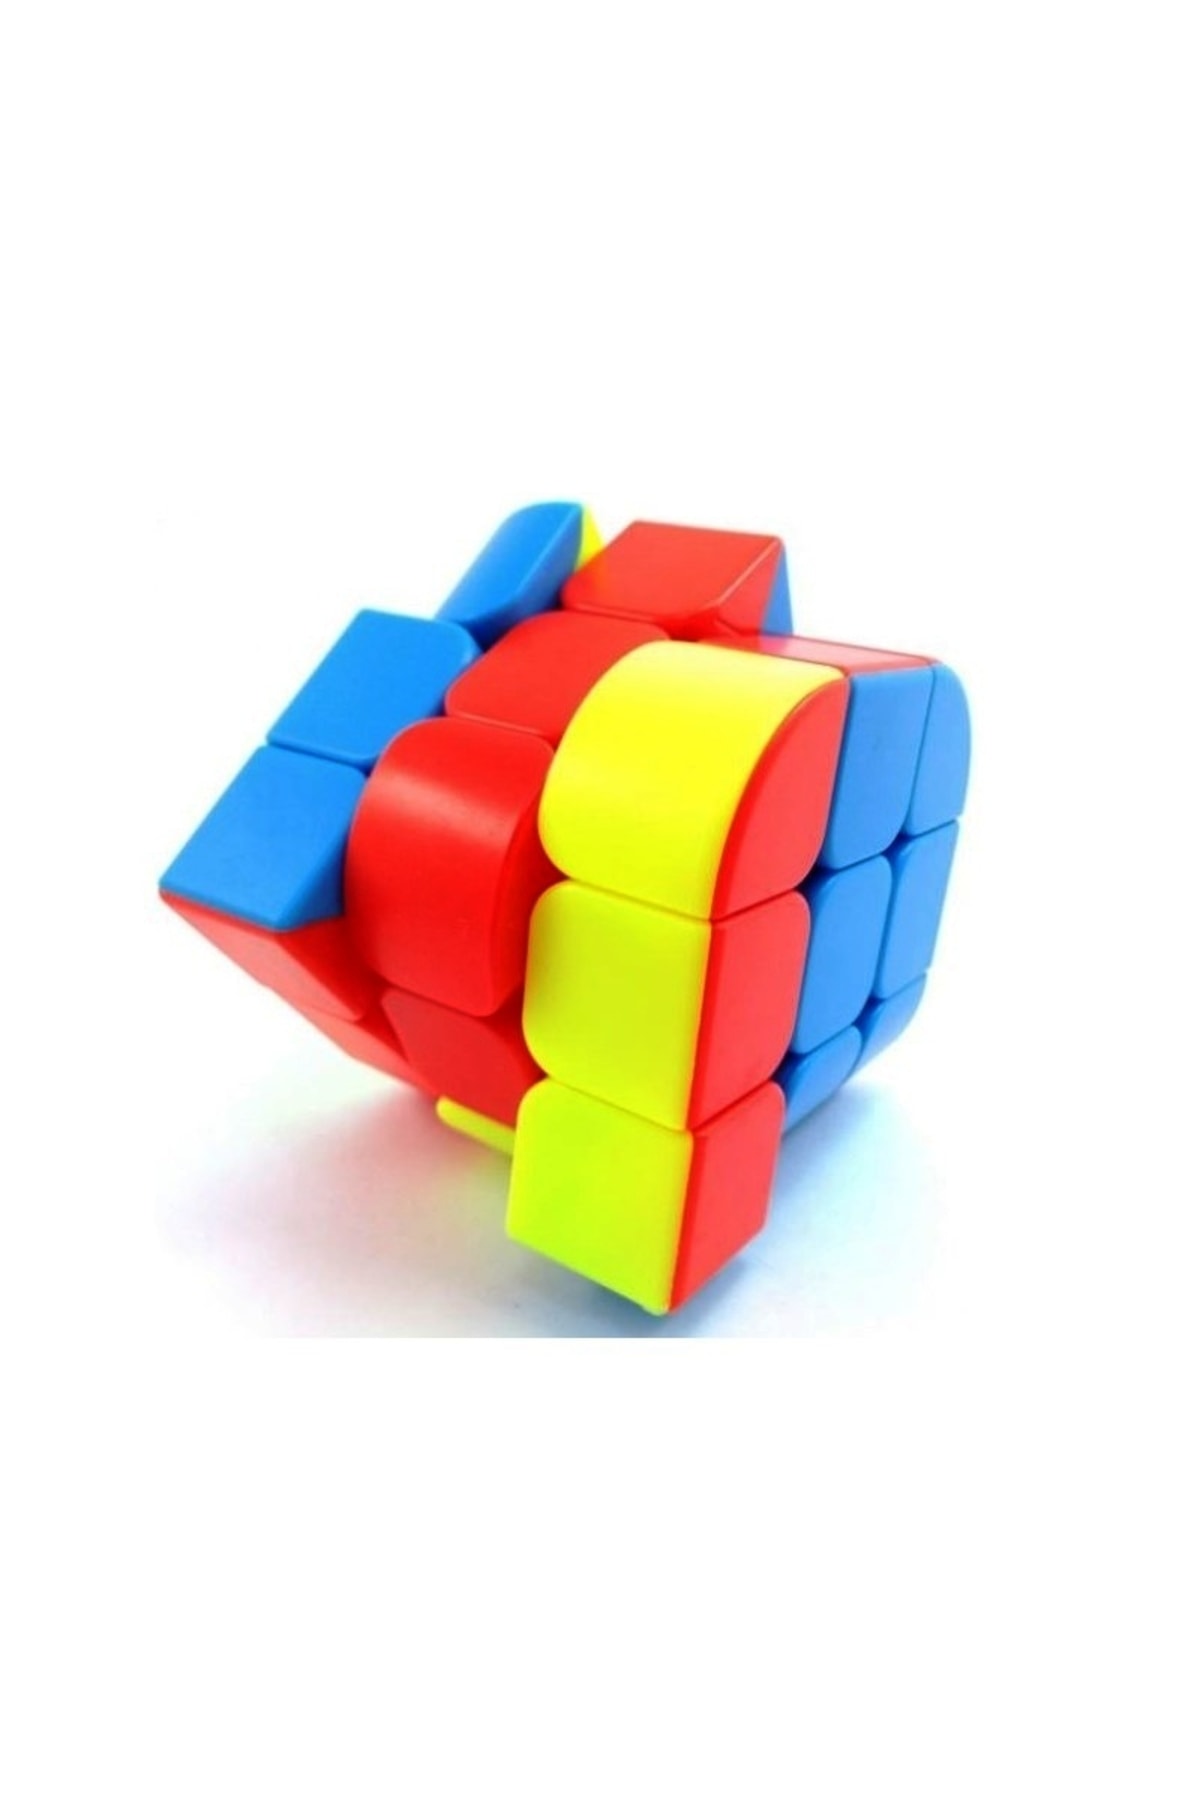 Kuzey Vip Kalite New Cuber Speed Curve Pastel Renk 3x3 Zeka Küpü 3x3 Sabır Küpü 3x3 Rubiks Cube Akıl Oyunu